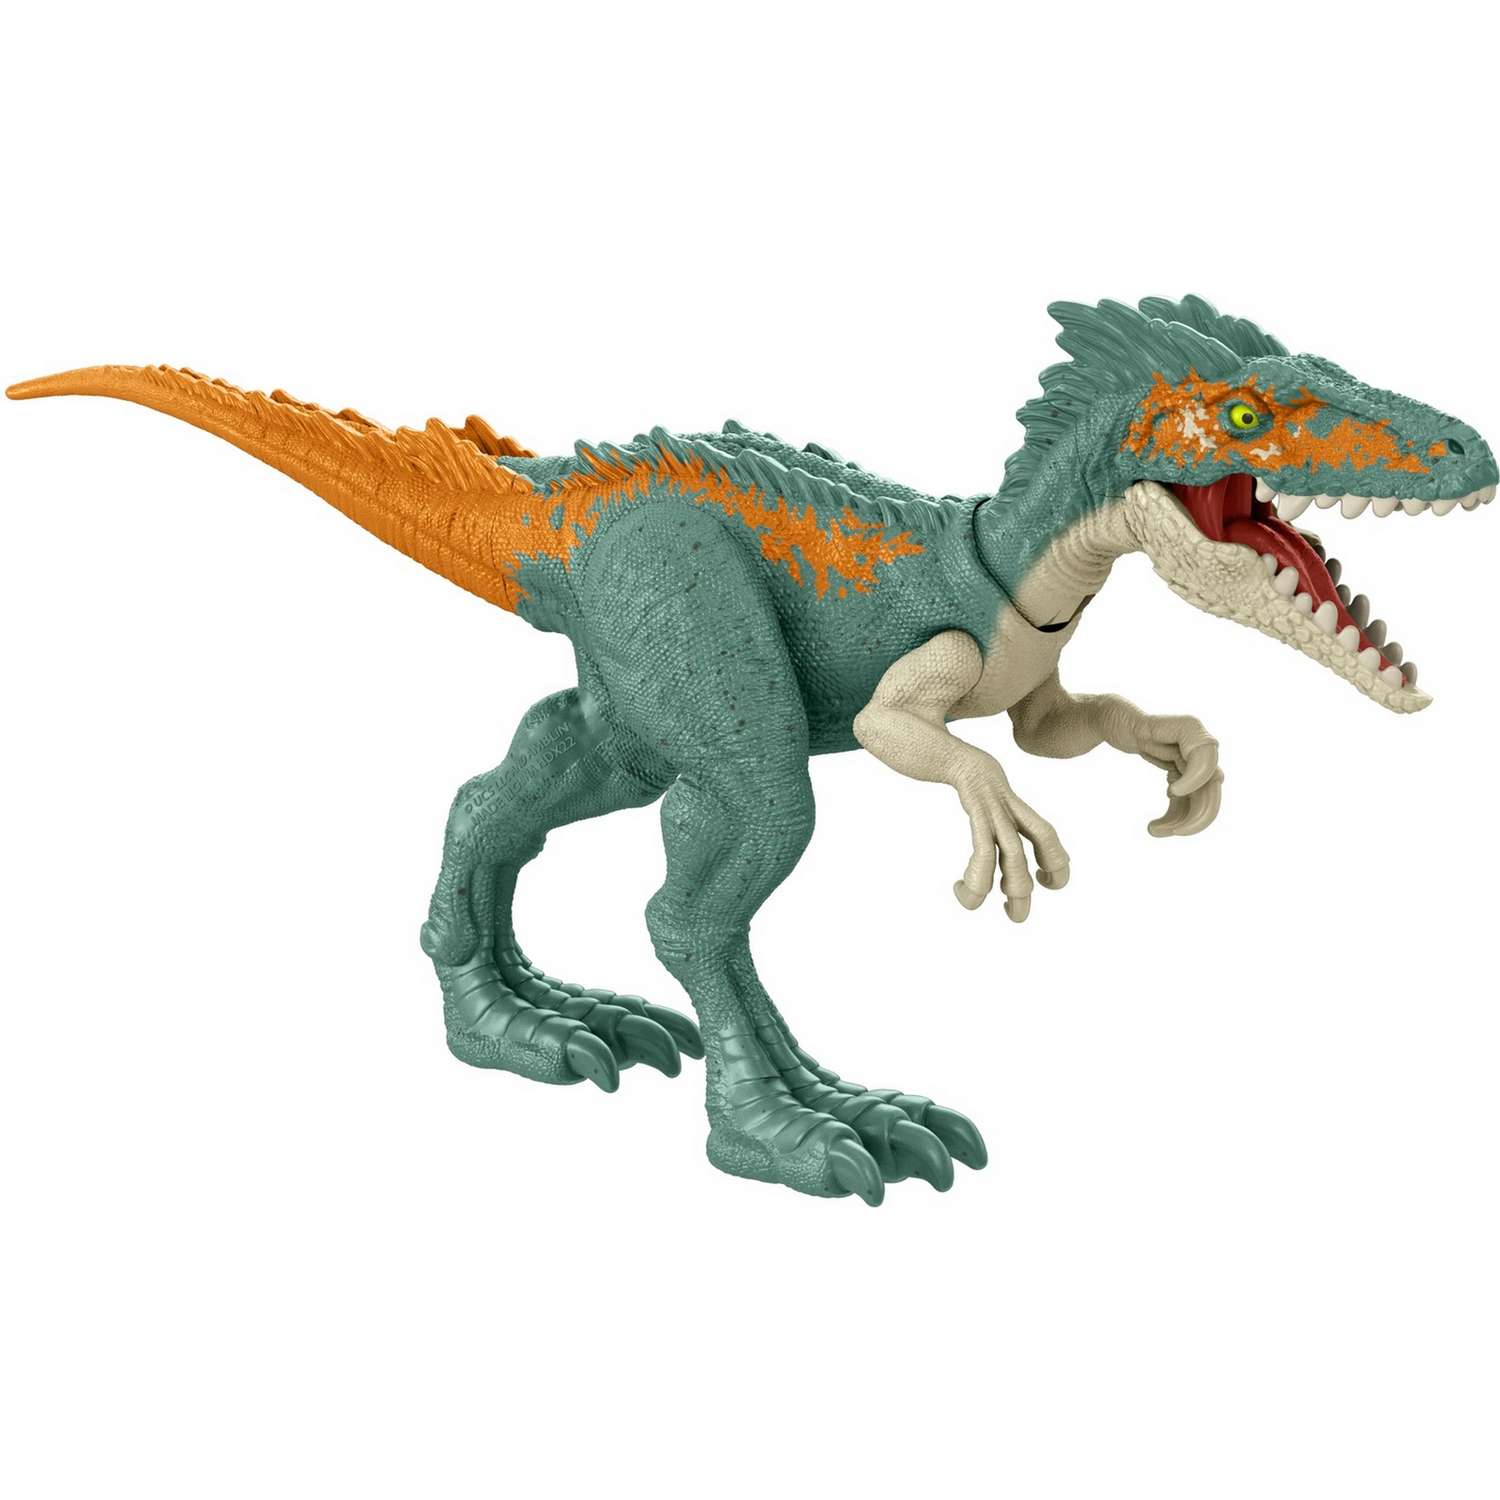 Фигурка Jurassic World Динозавр артикулируемый Морос Интрепидус HDX22 - фото 1